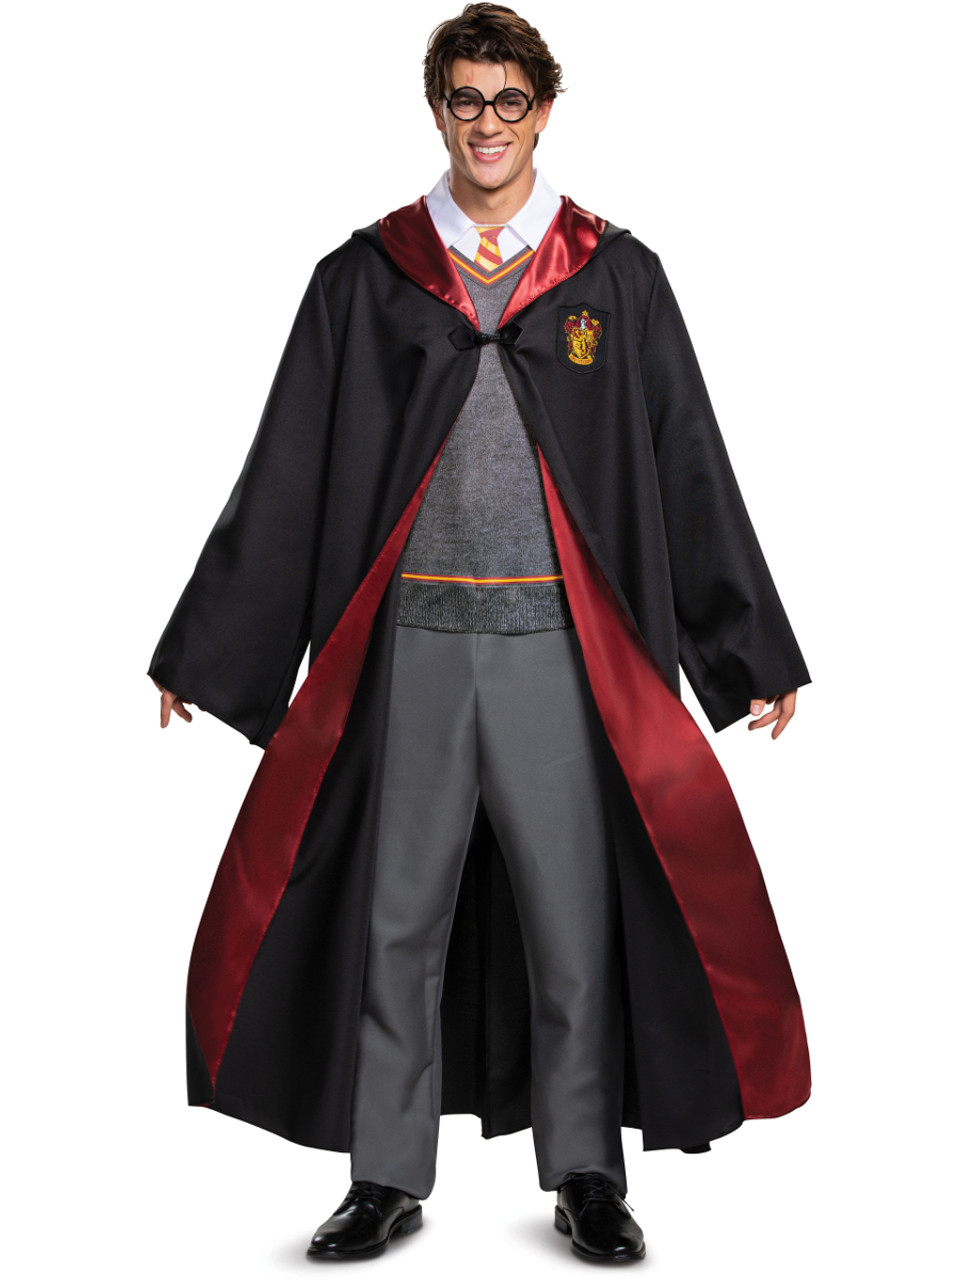 Harry Potter Gryffindor Student Robes Deluxe Men's Costume